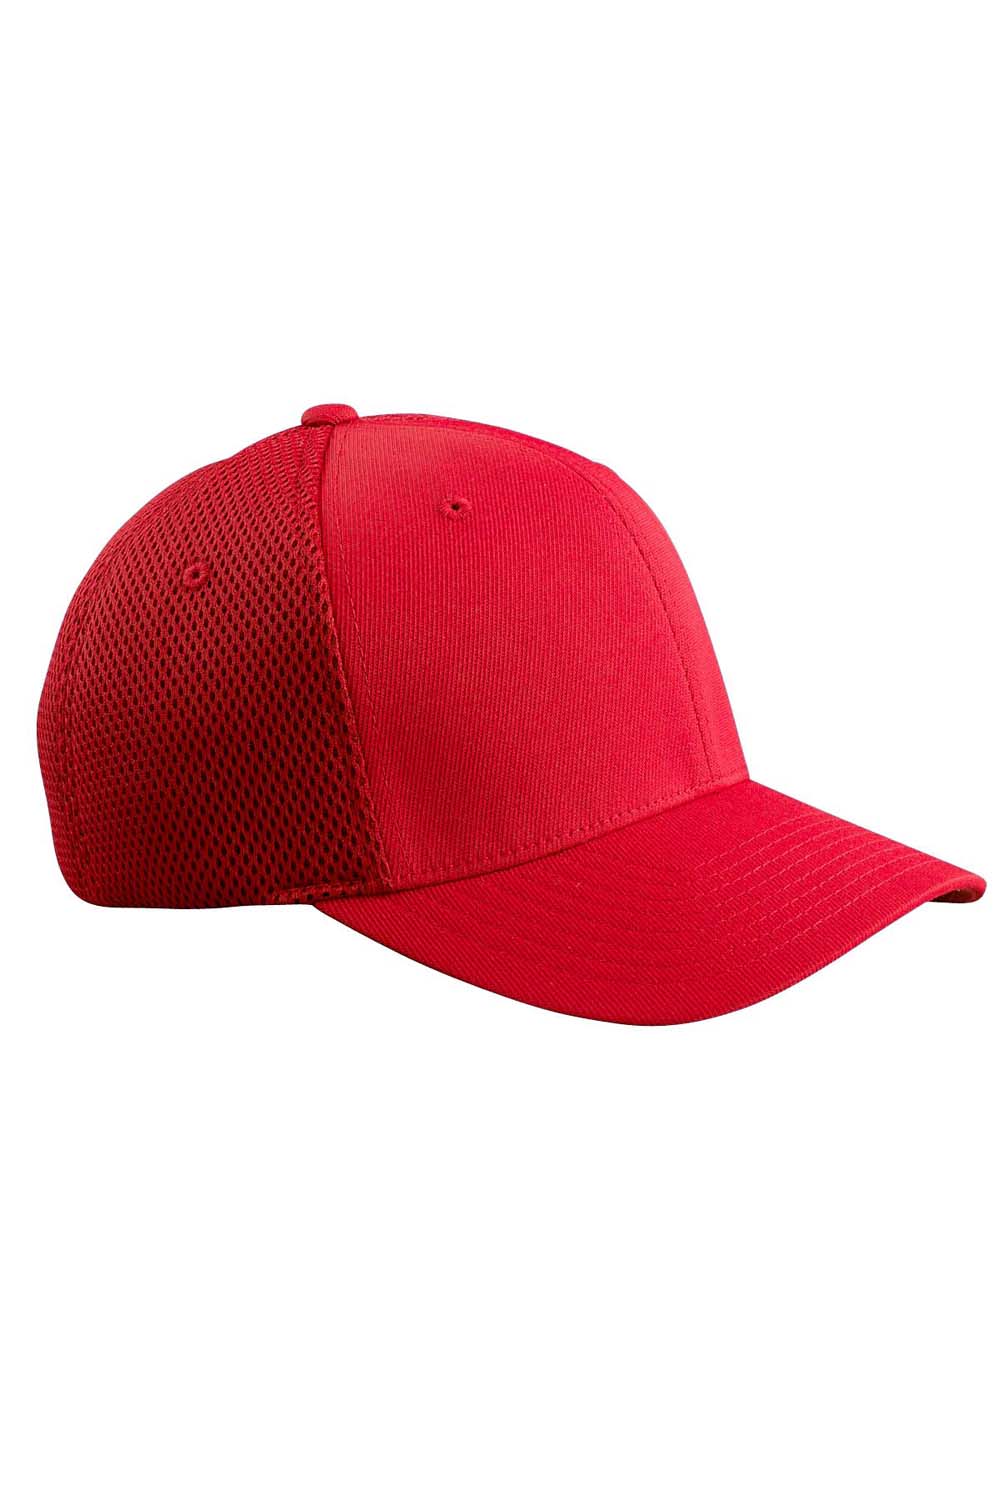 Flexfit 6533 Mens Stretch Fit Hat Red Front